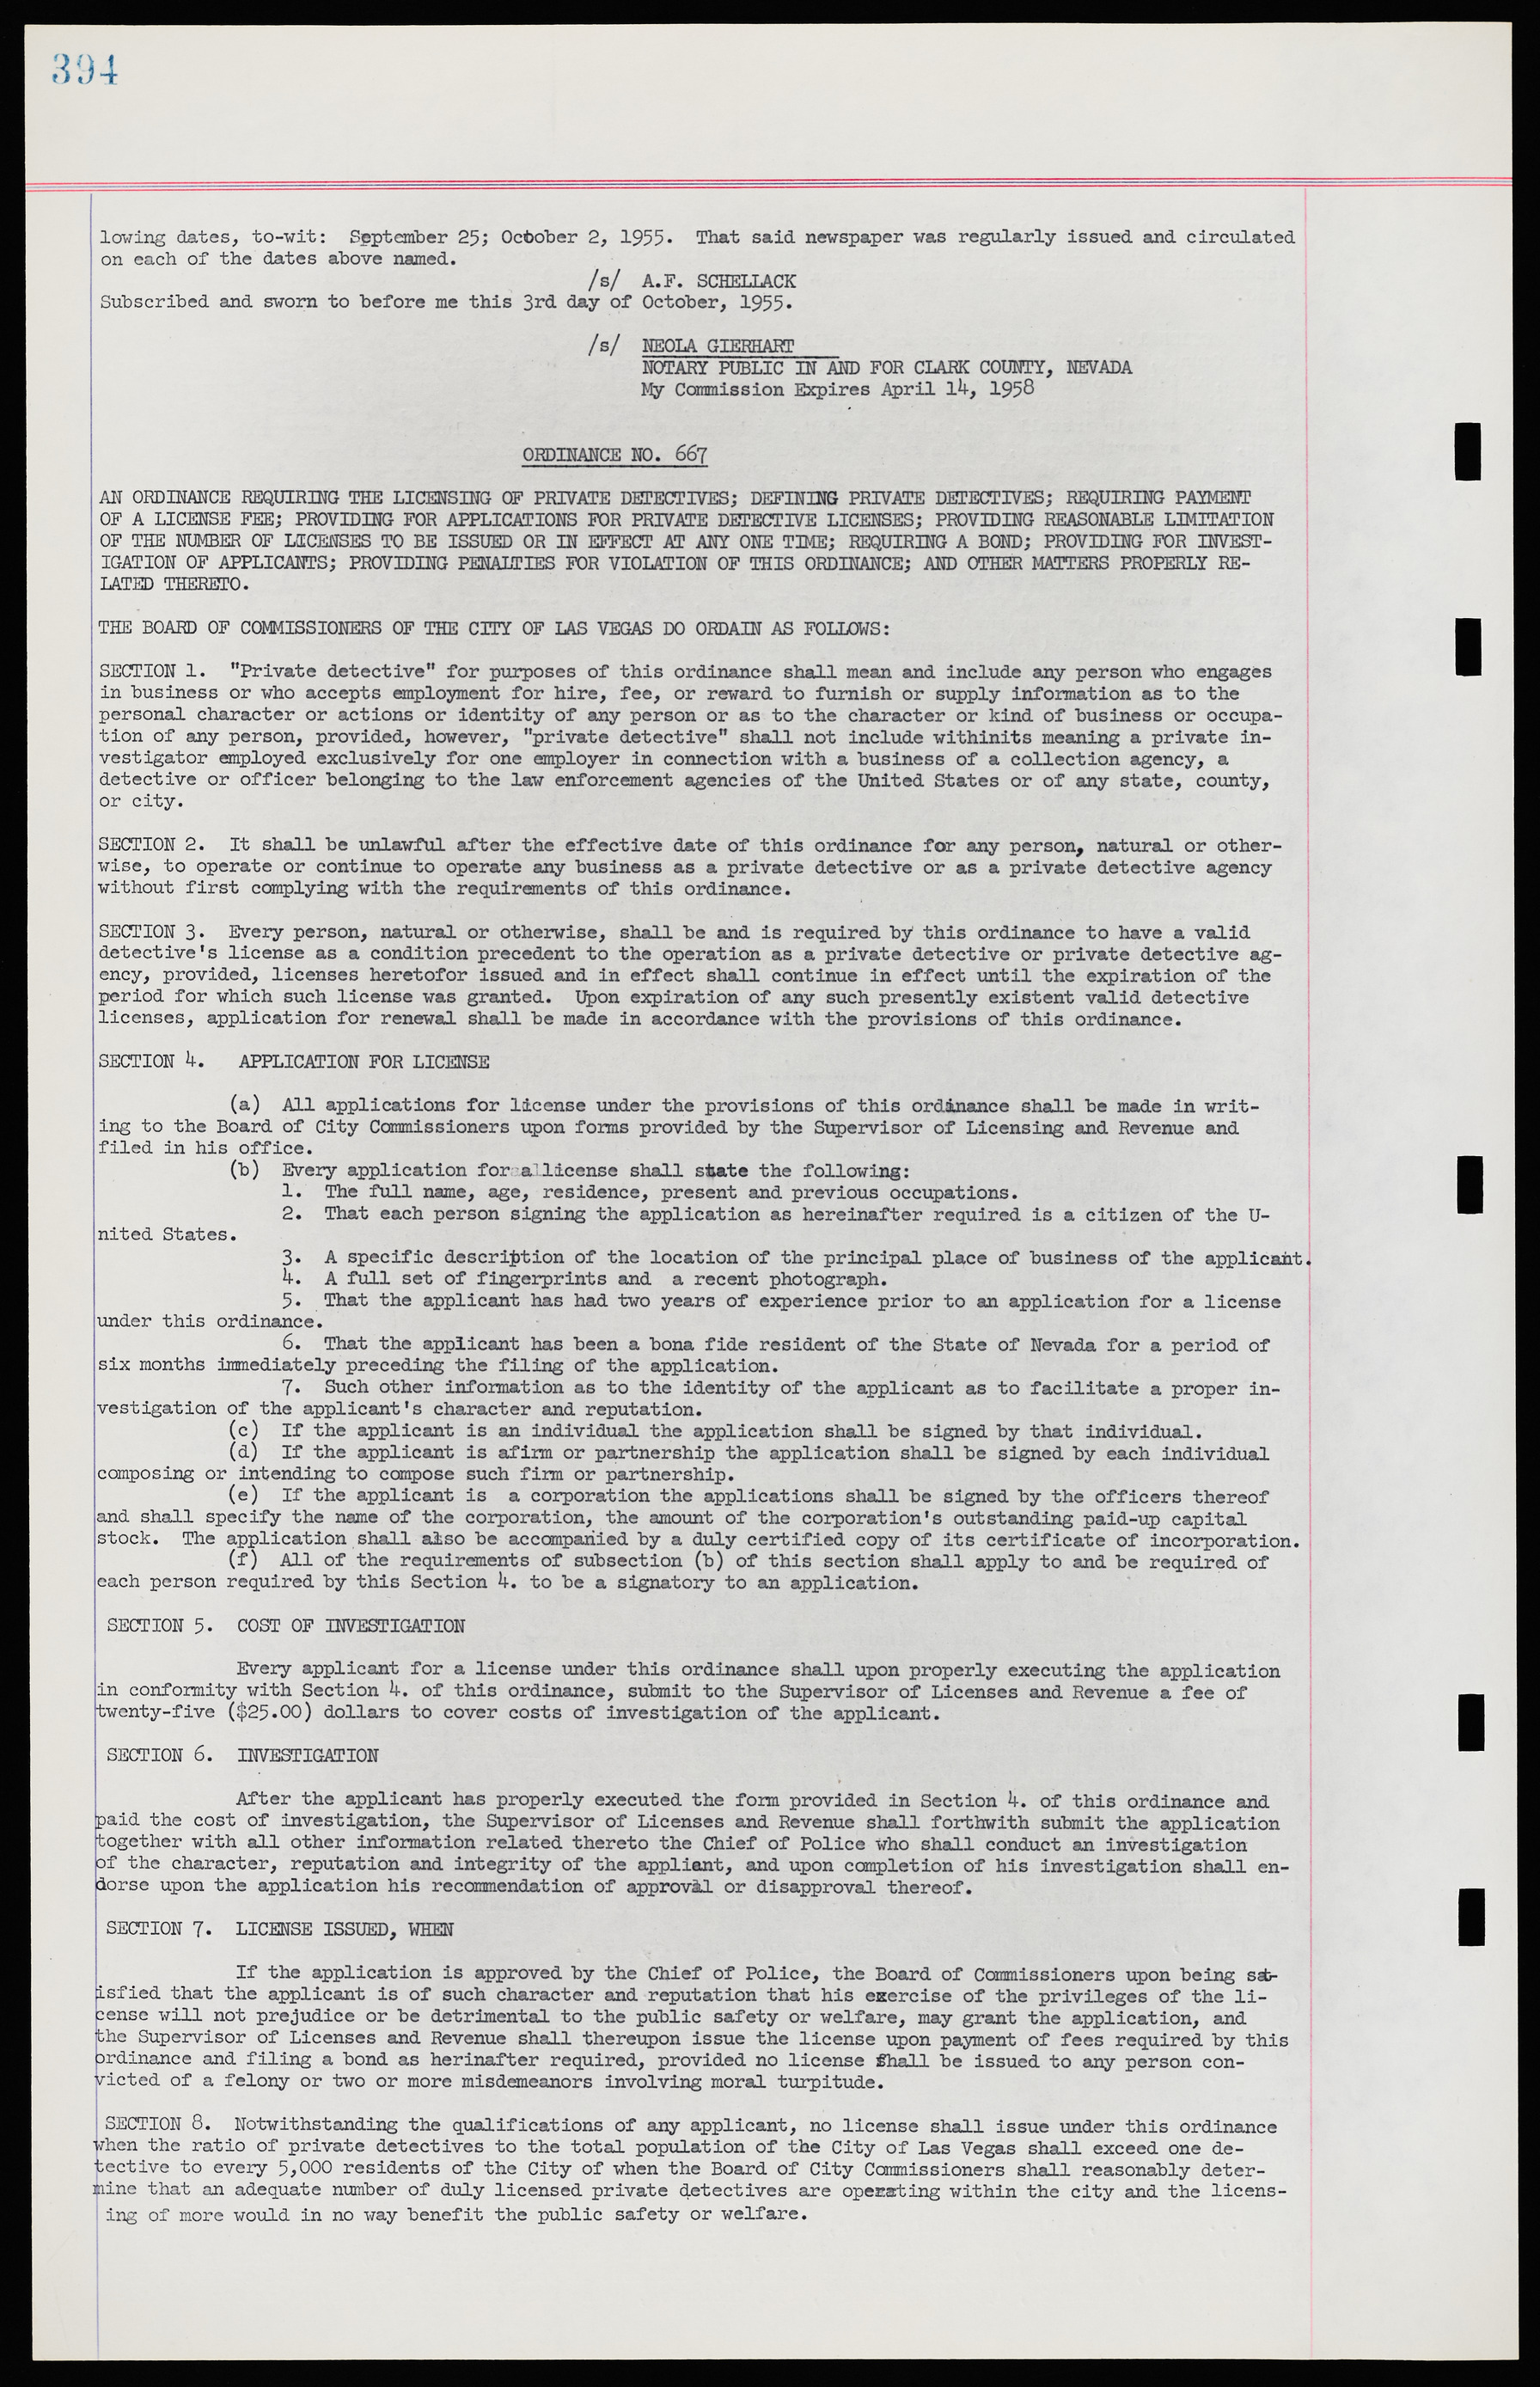 Las Vegas City Ordinances, November 13, 1950 to August 6, 1958, lvc000015-402